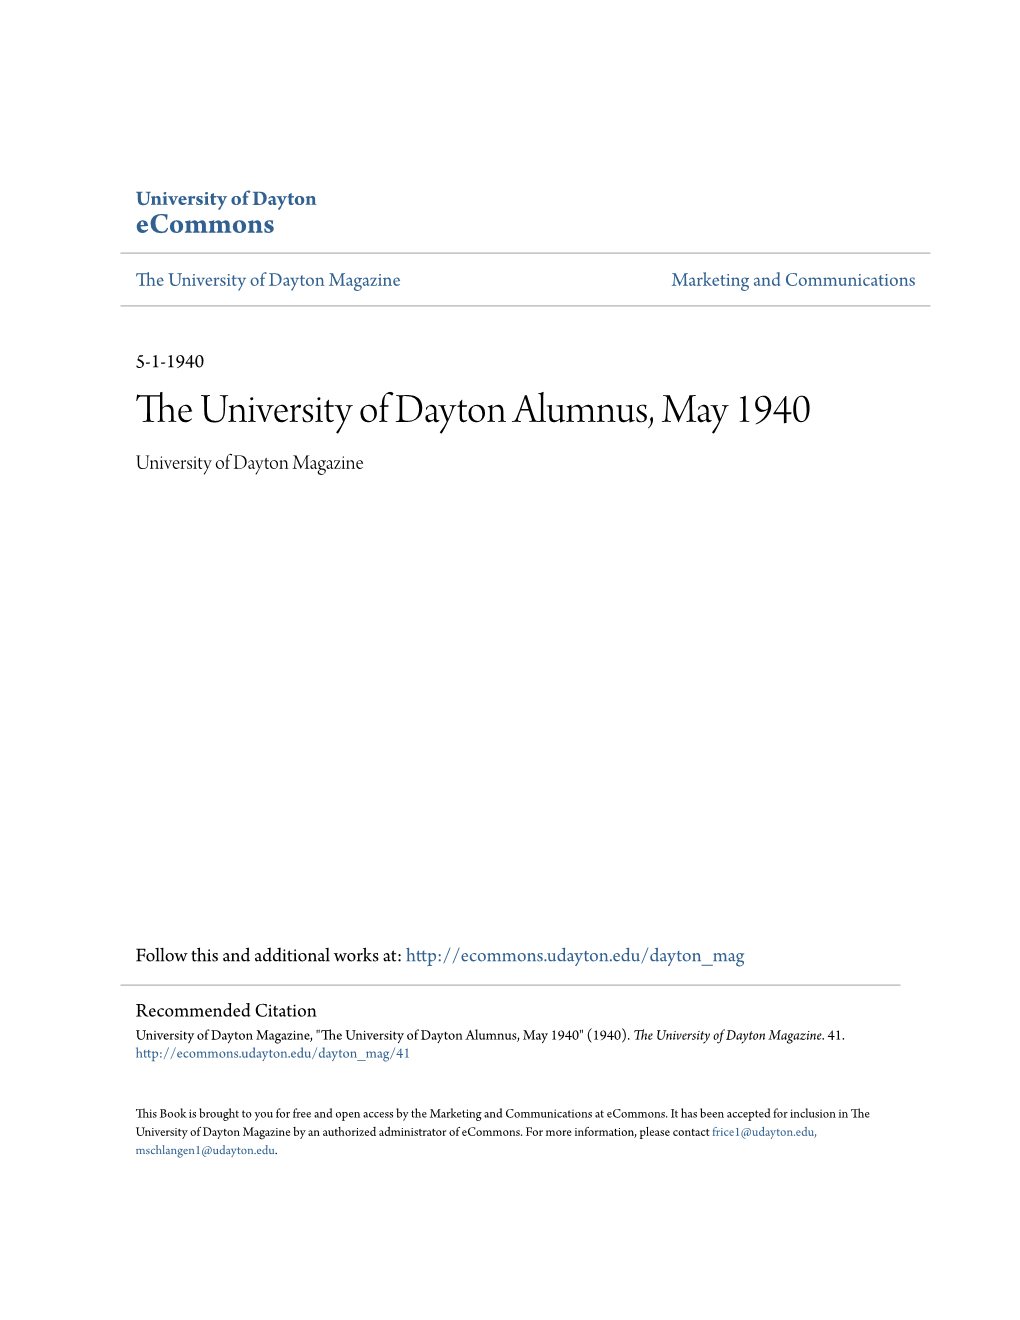 The University of Dayton Alumnus, May 1940